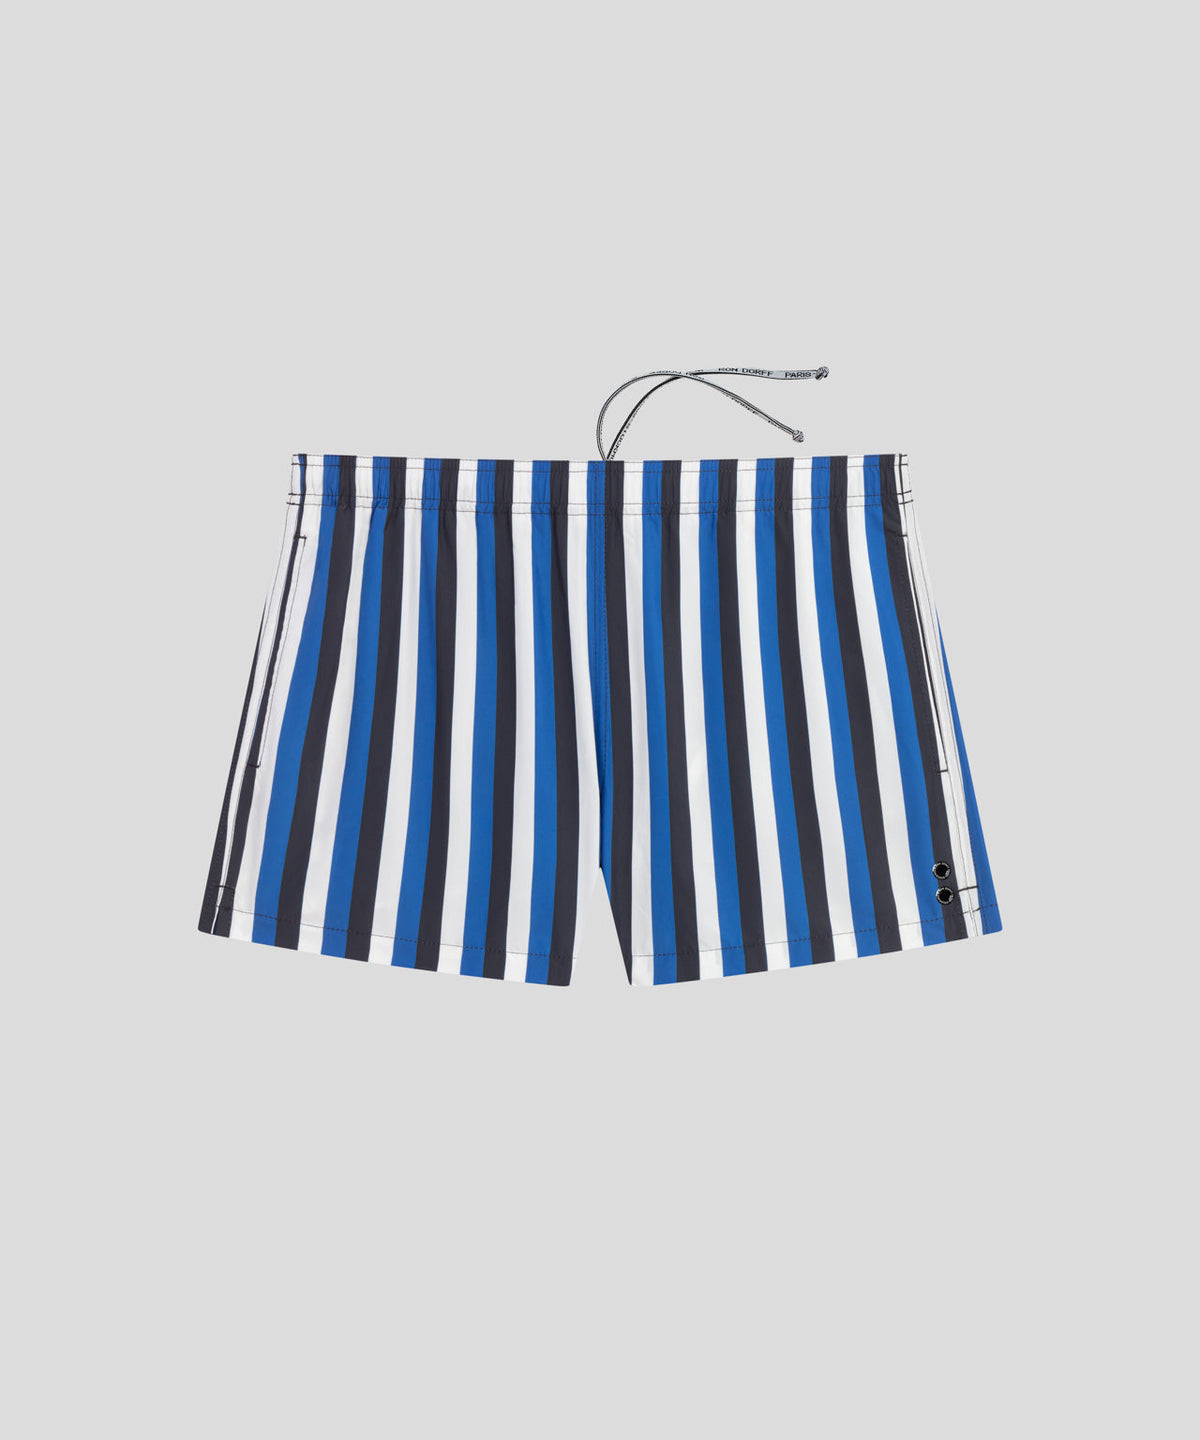 Swim Shorts Tricolor Vertical Stripes: Greek Blue/Navy/White